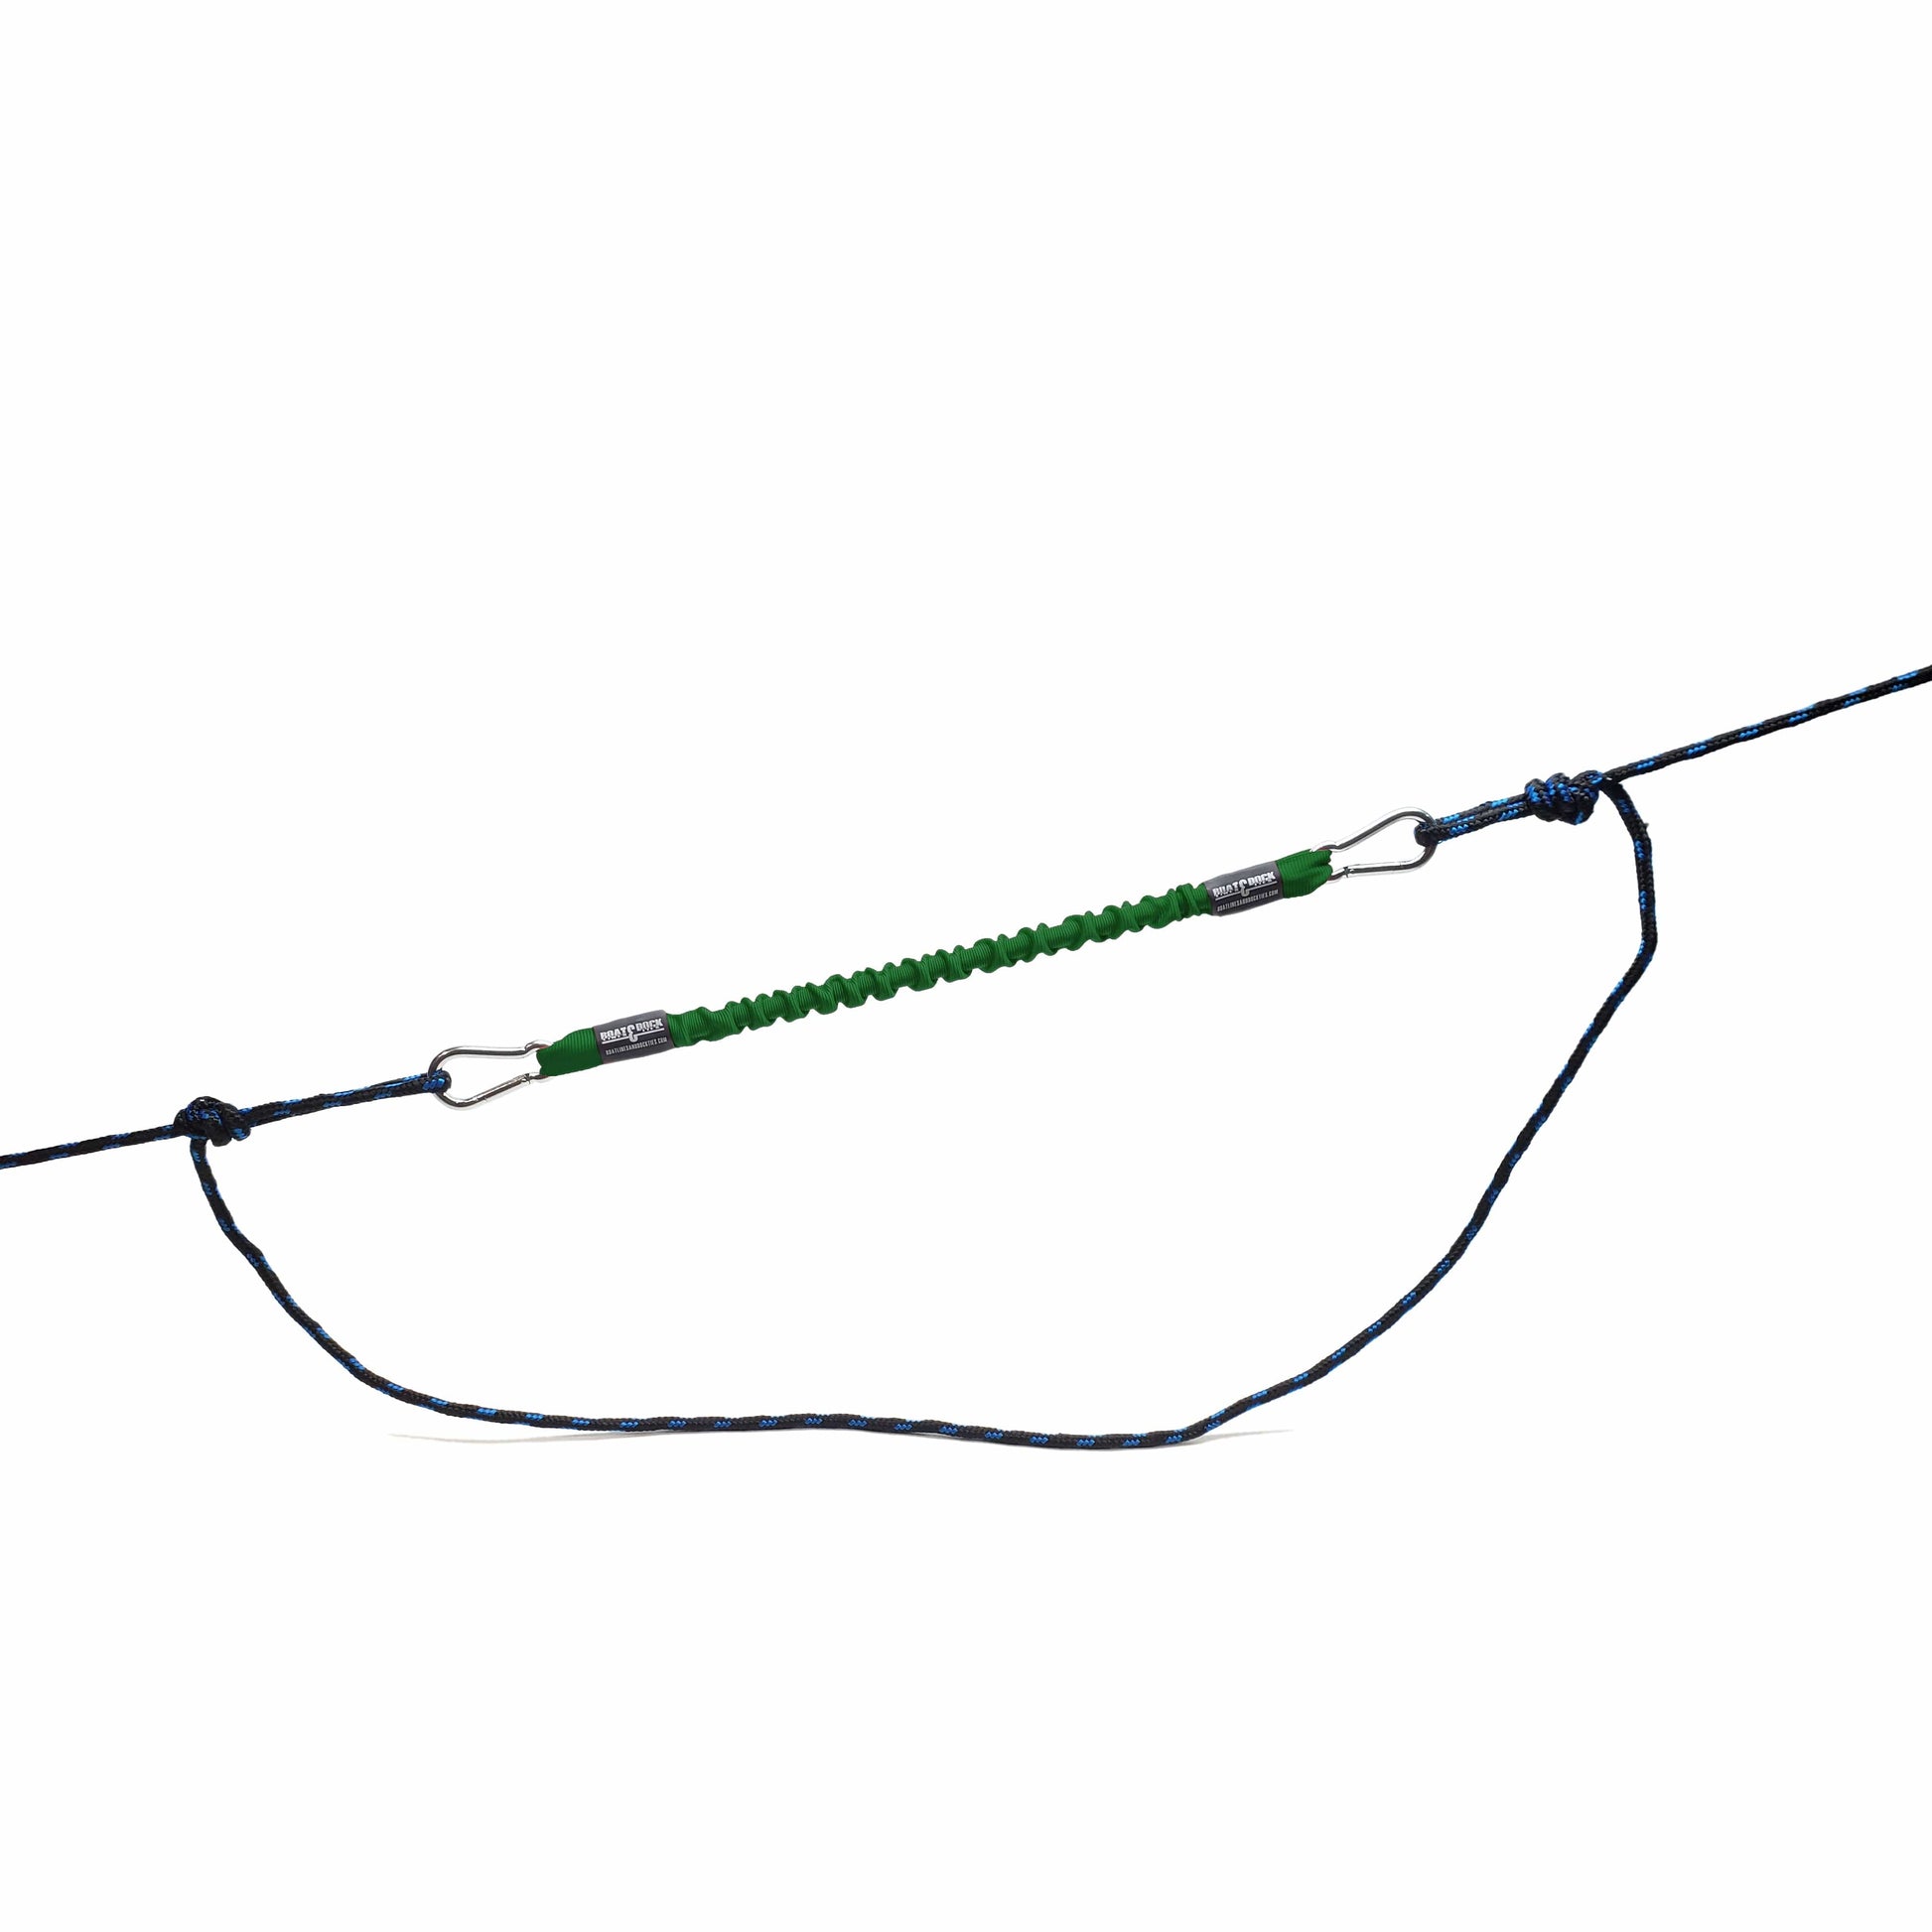 Bungee Snubber Dock Tie Line - With Stainless Steel Hooks - 1 per pack - Boat Lines & Dock Ties Boat Lines & Dock Ties 24inch / Green